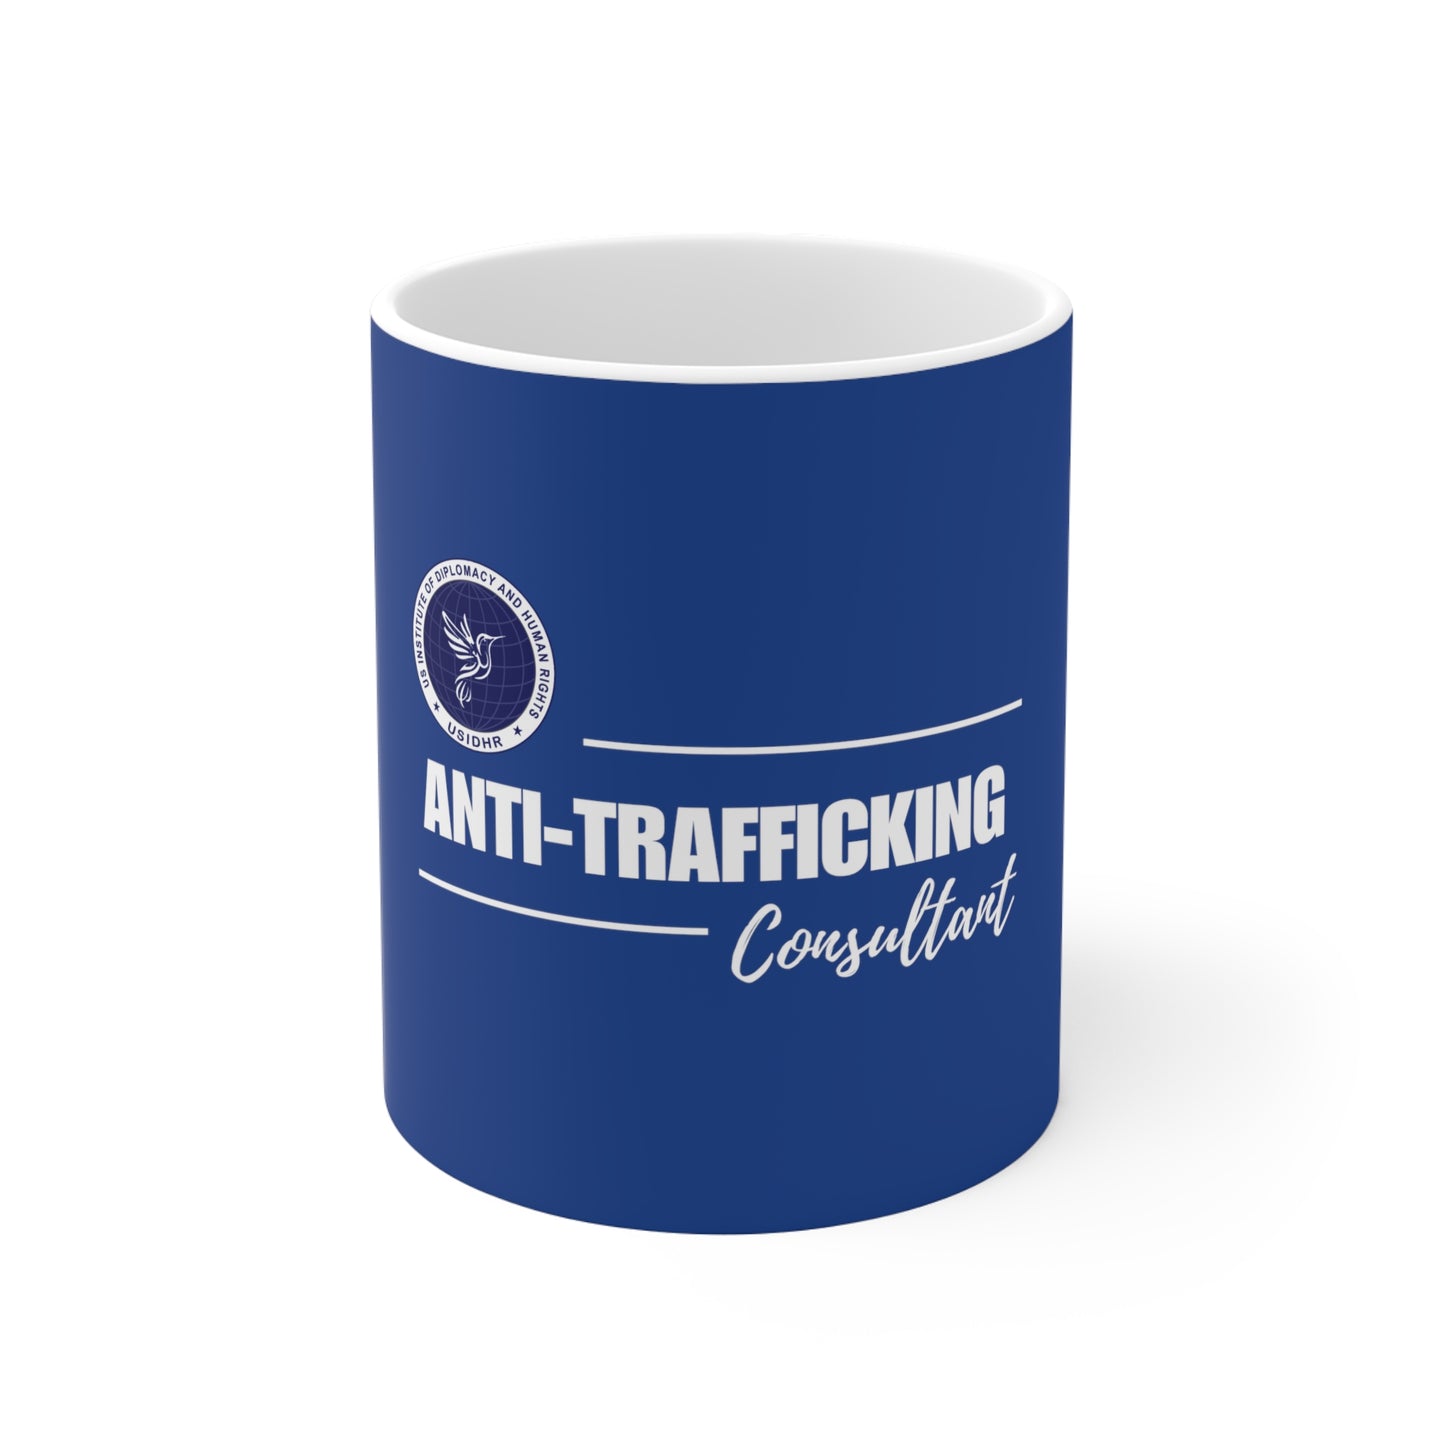 Anti-Trafficking Consultant Mug